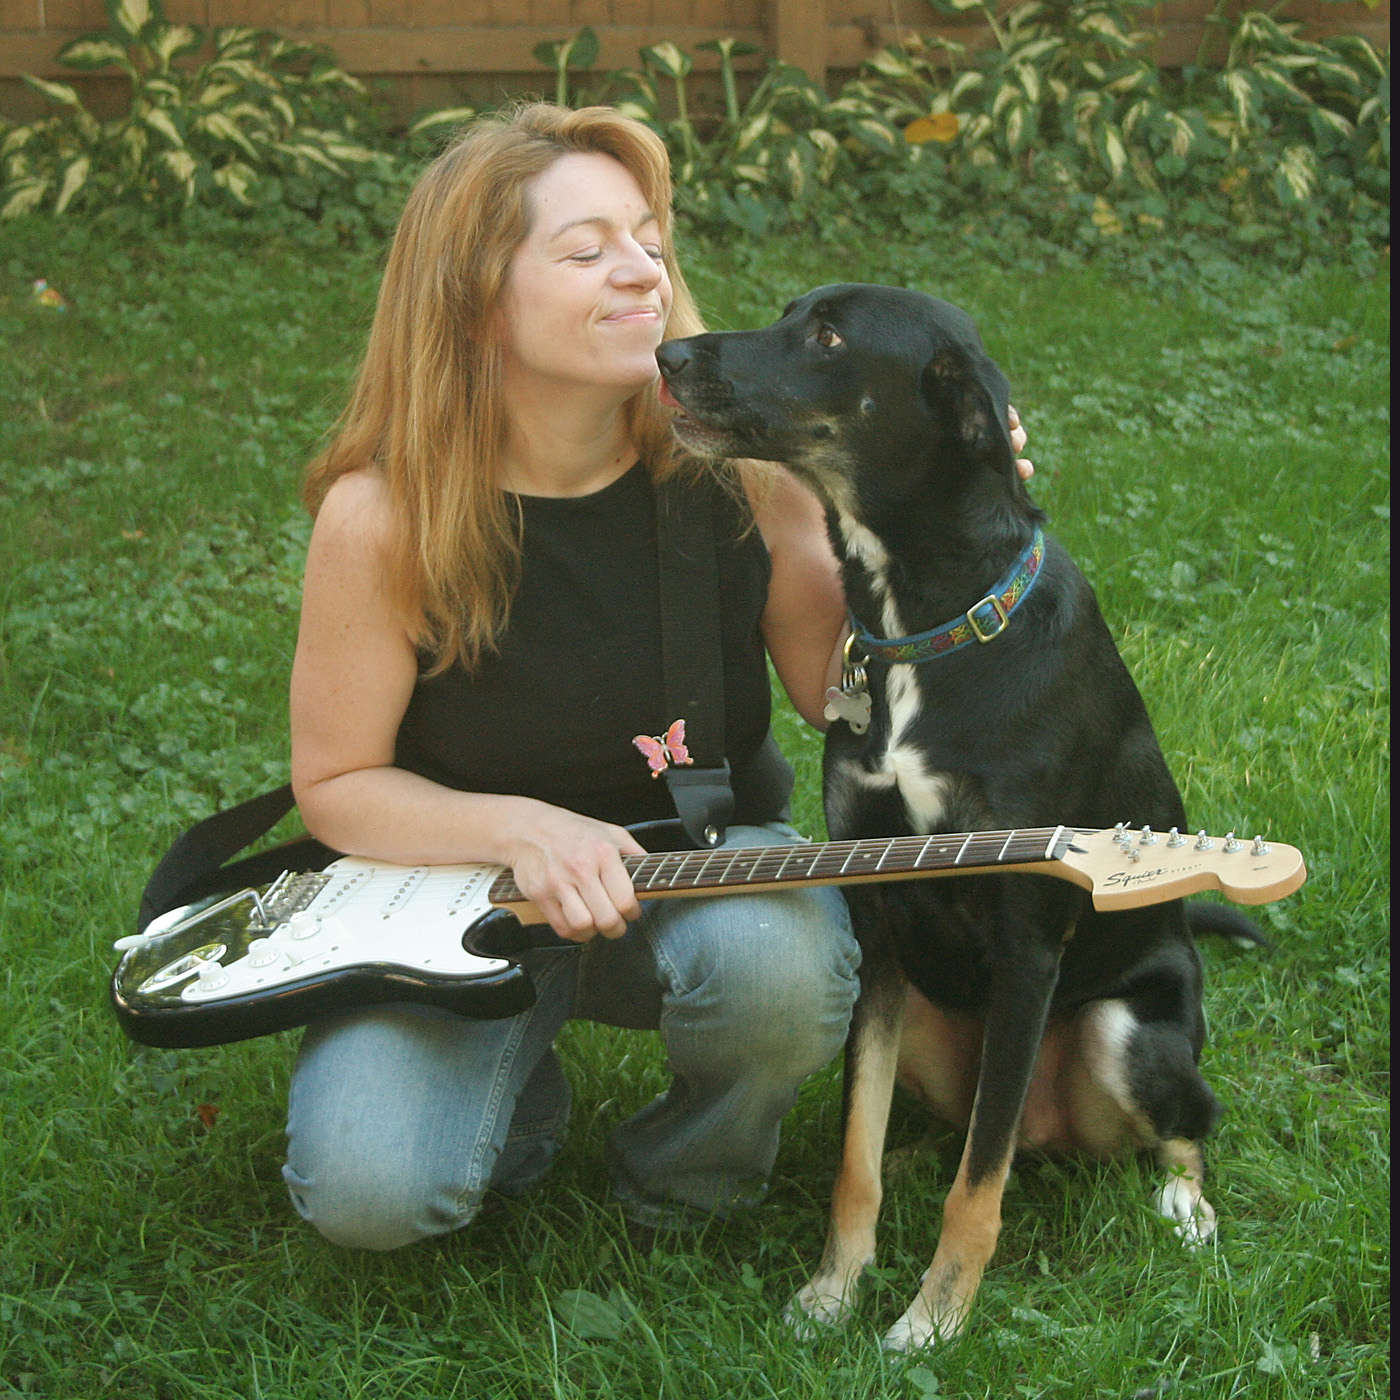 photo: Elizabeth, her dog and her guitar